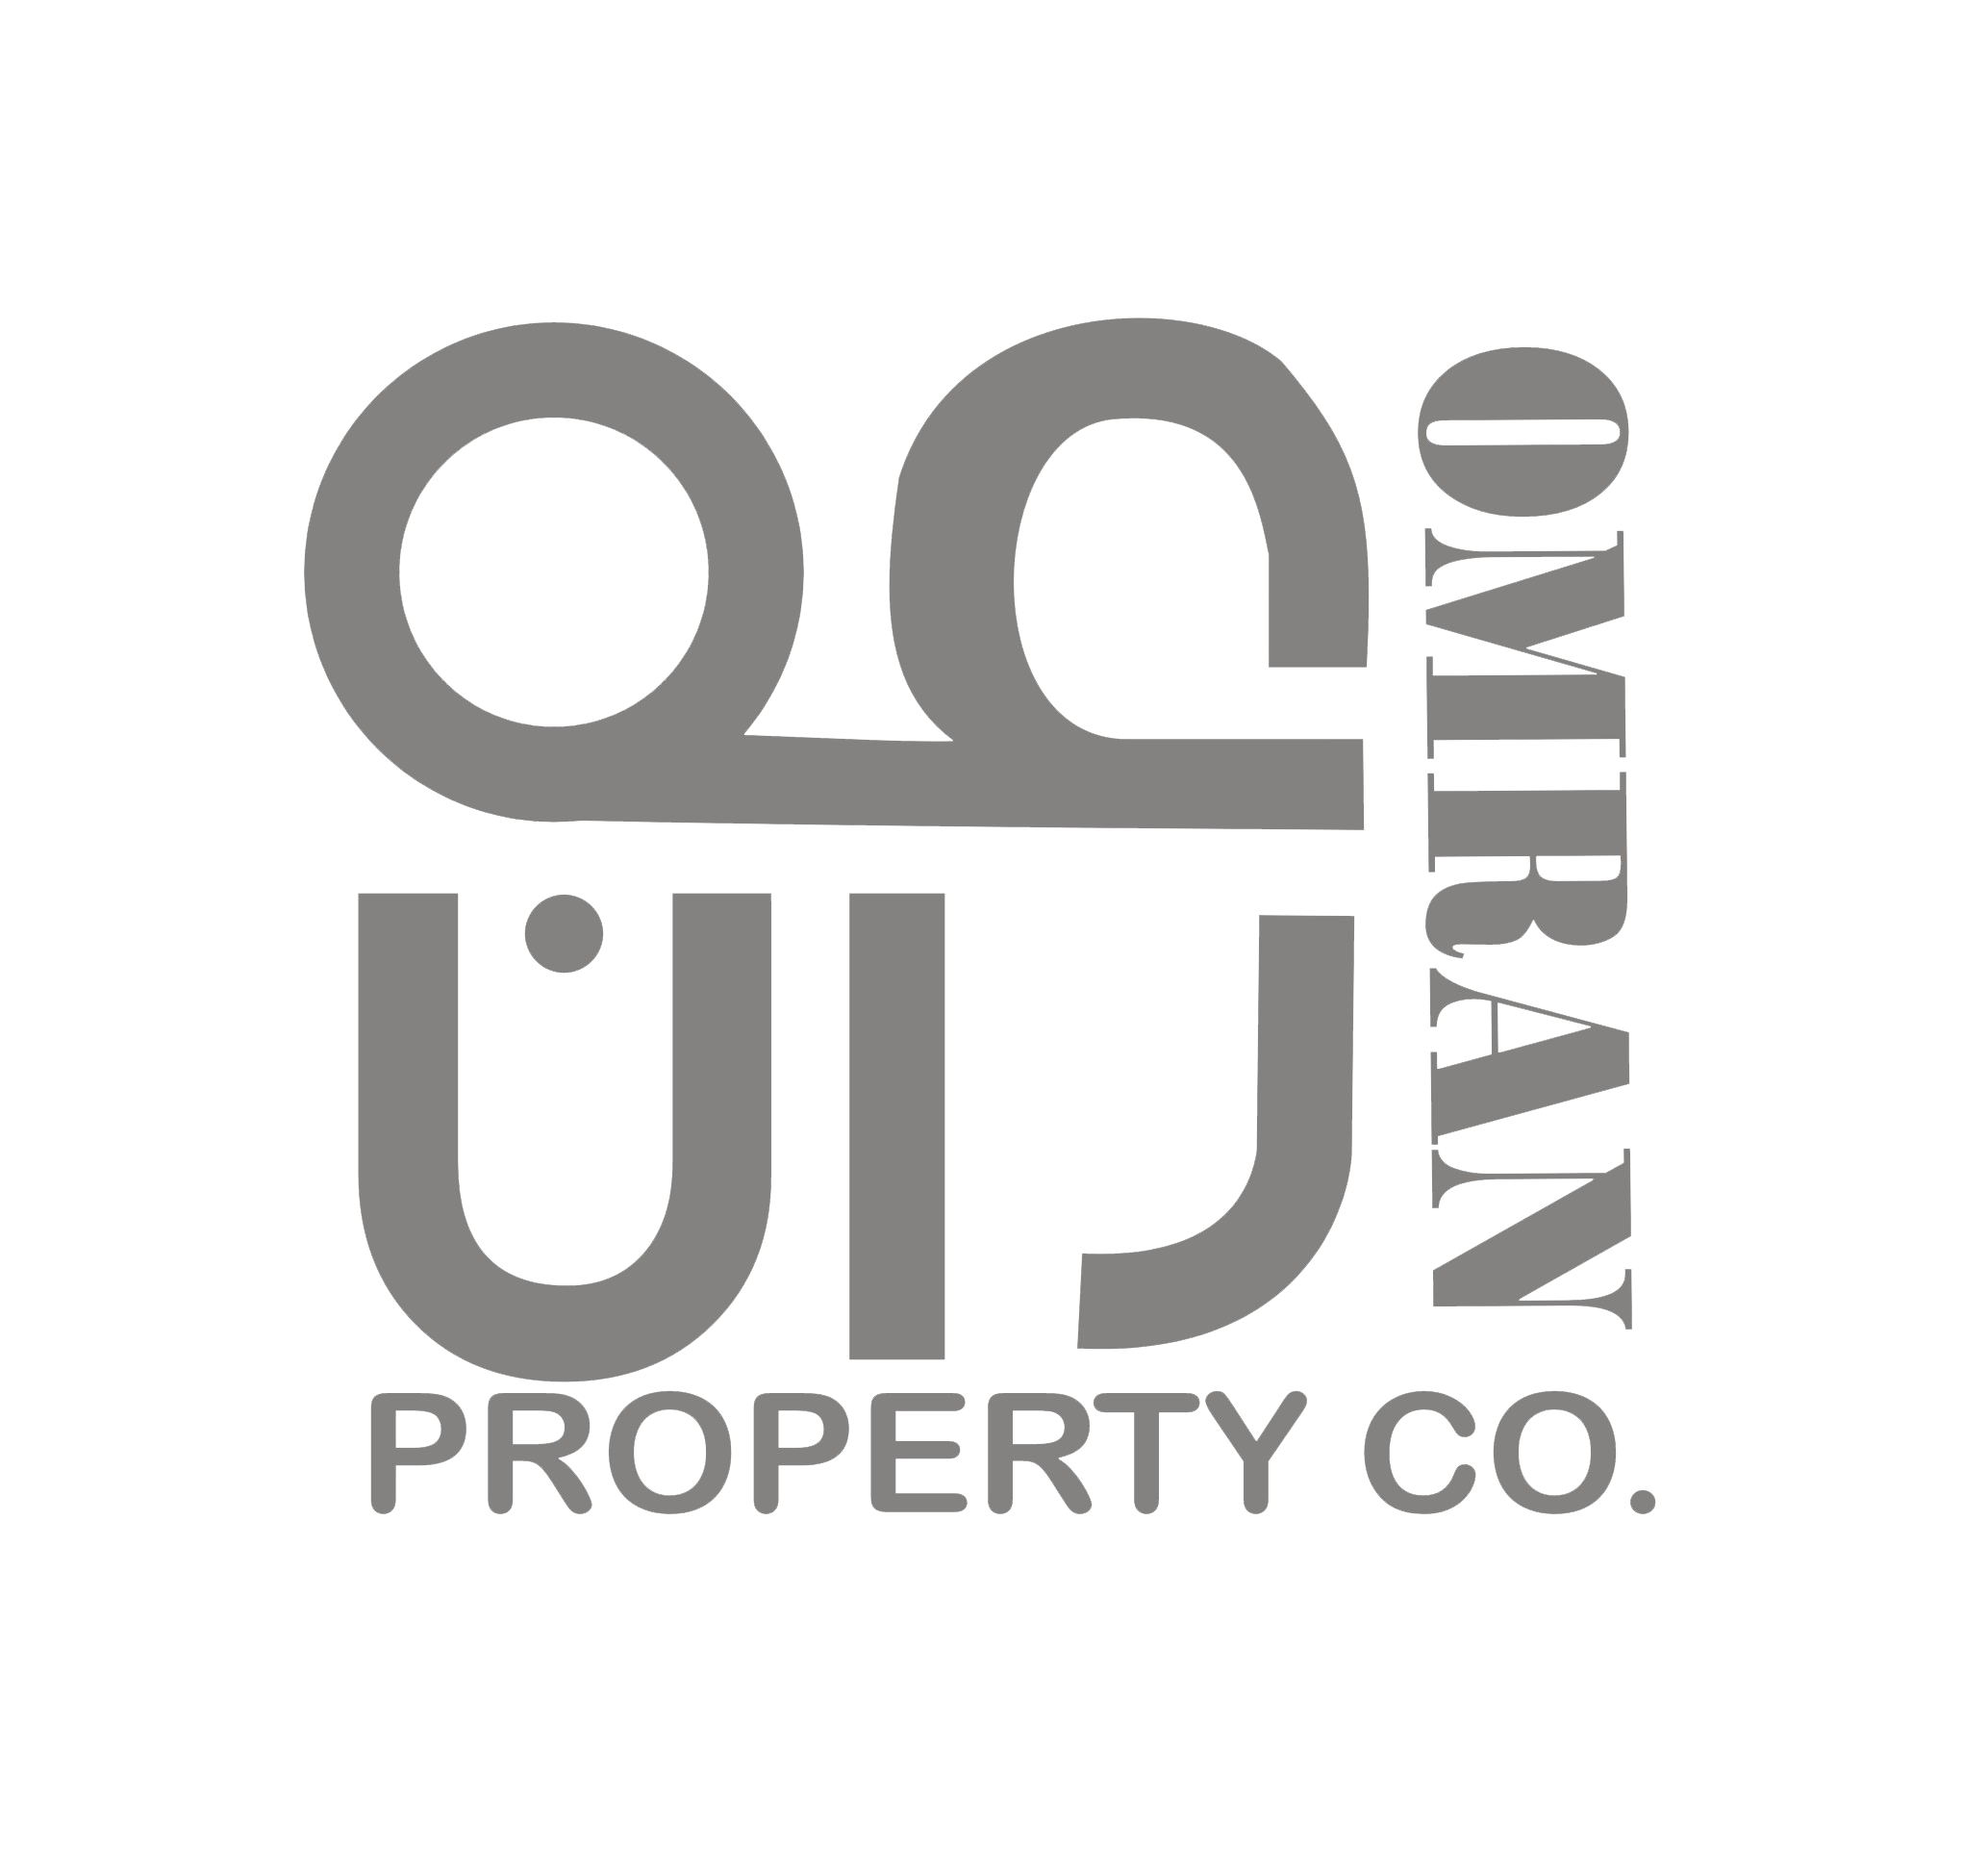 Omran Property